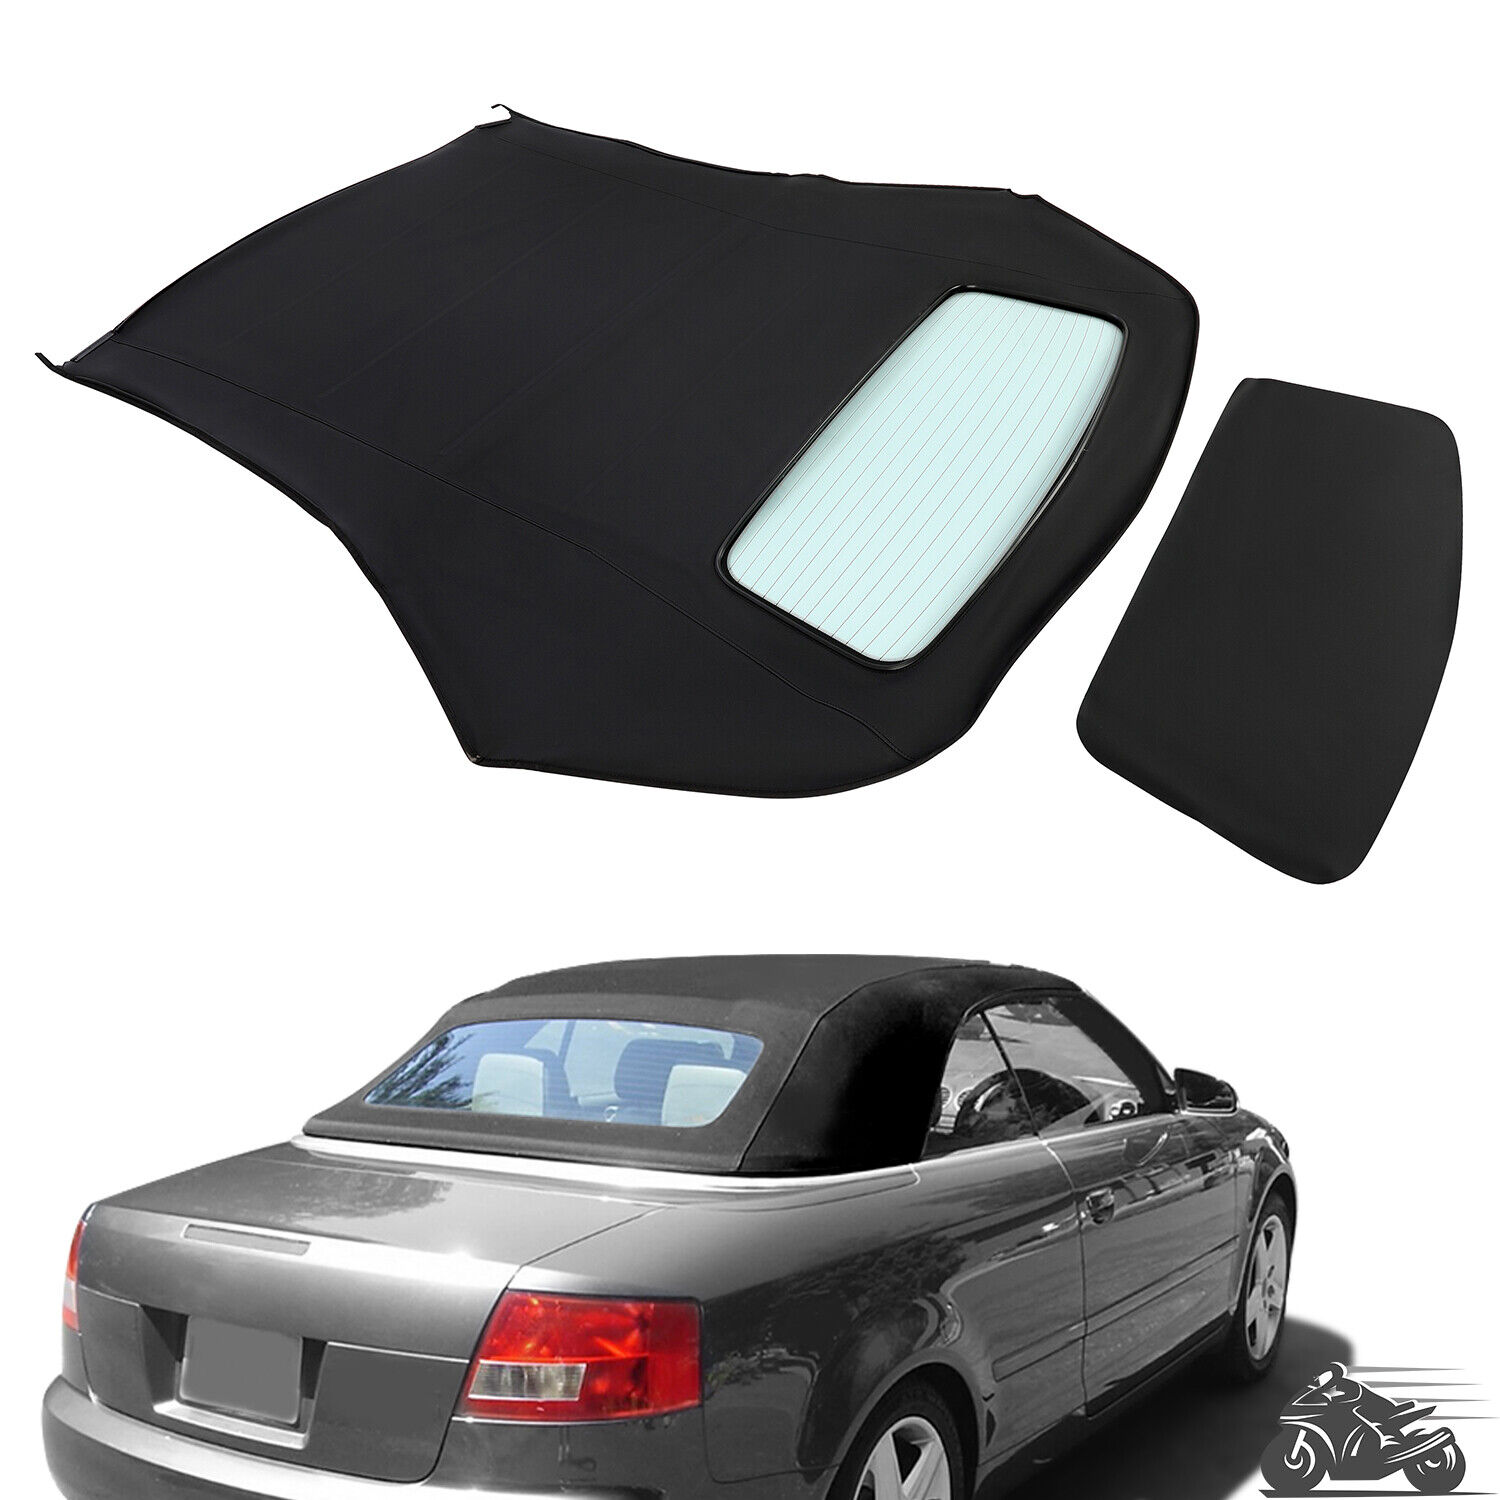 Fits Audi A4 03-09 Black Convertible Top W/ Heated Glass Window Sailcloth Vinyl